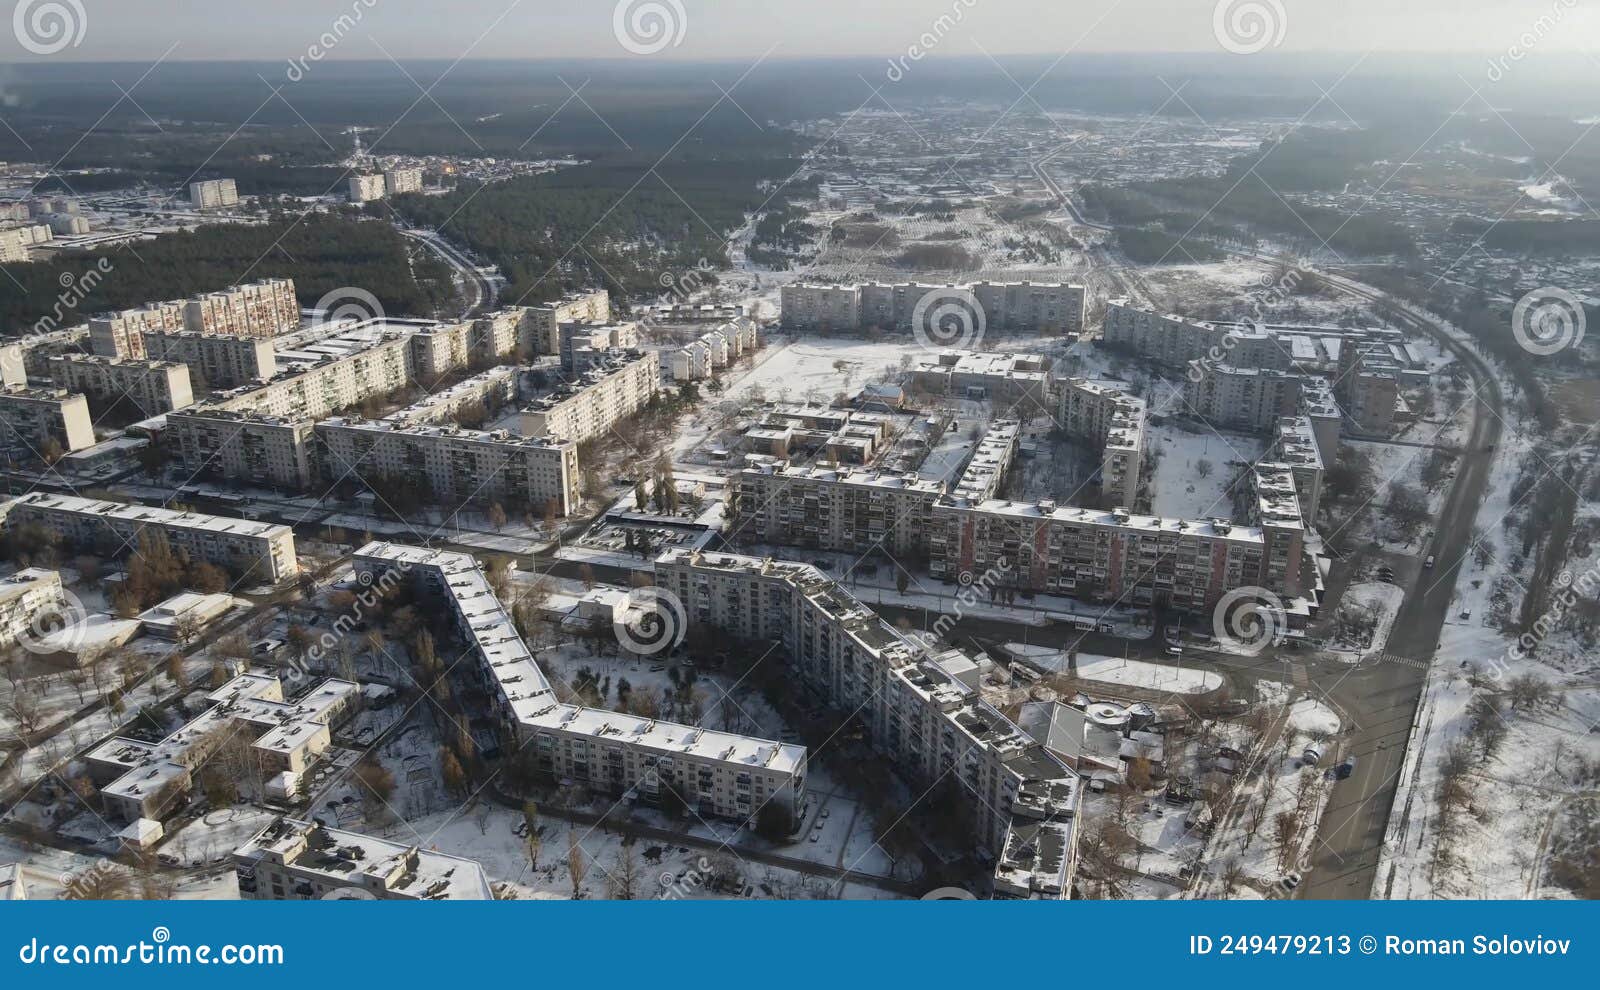 sievierodonetsk. city in ukraine. top view. lugansk region